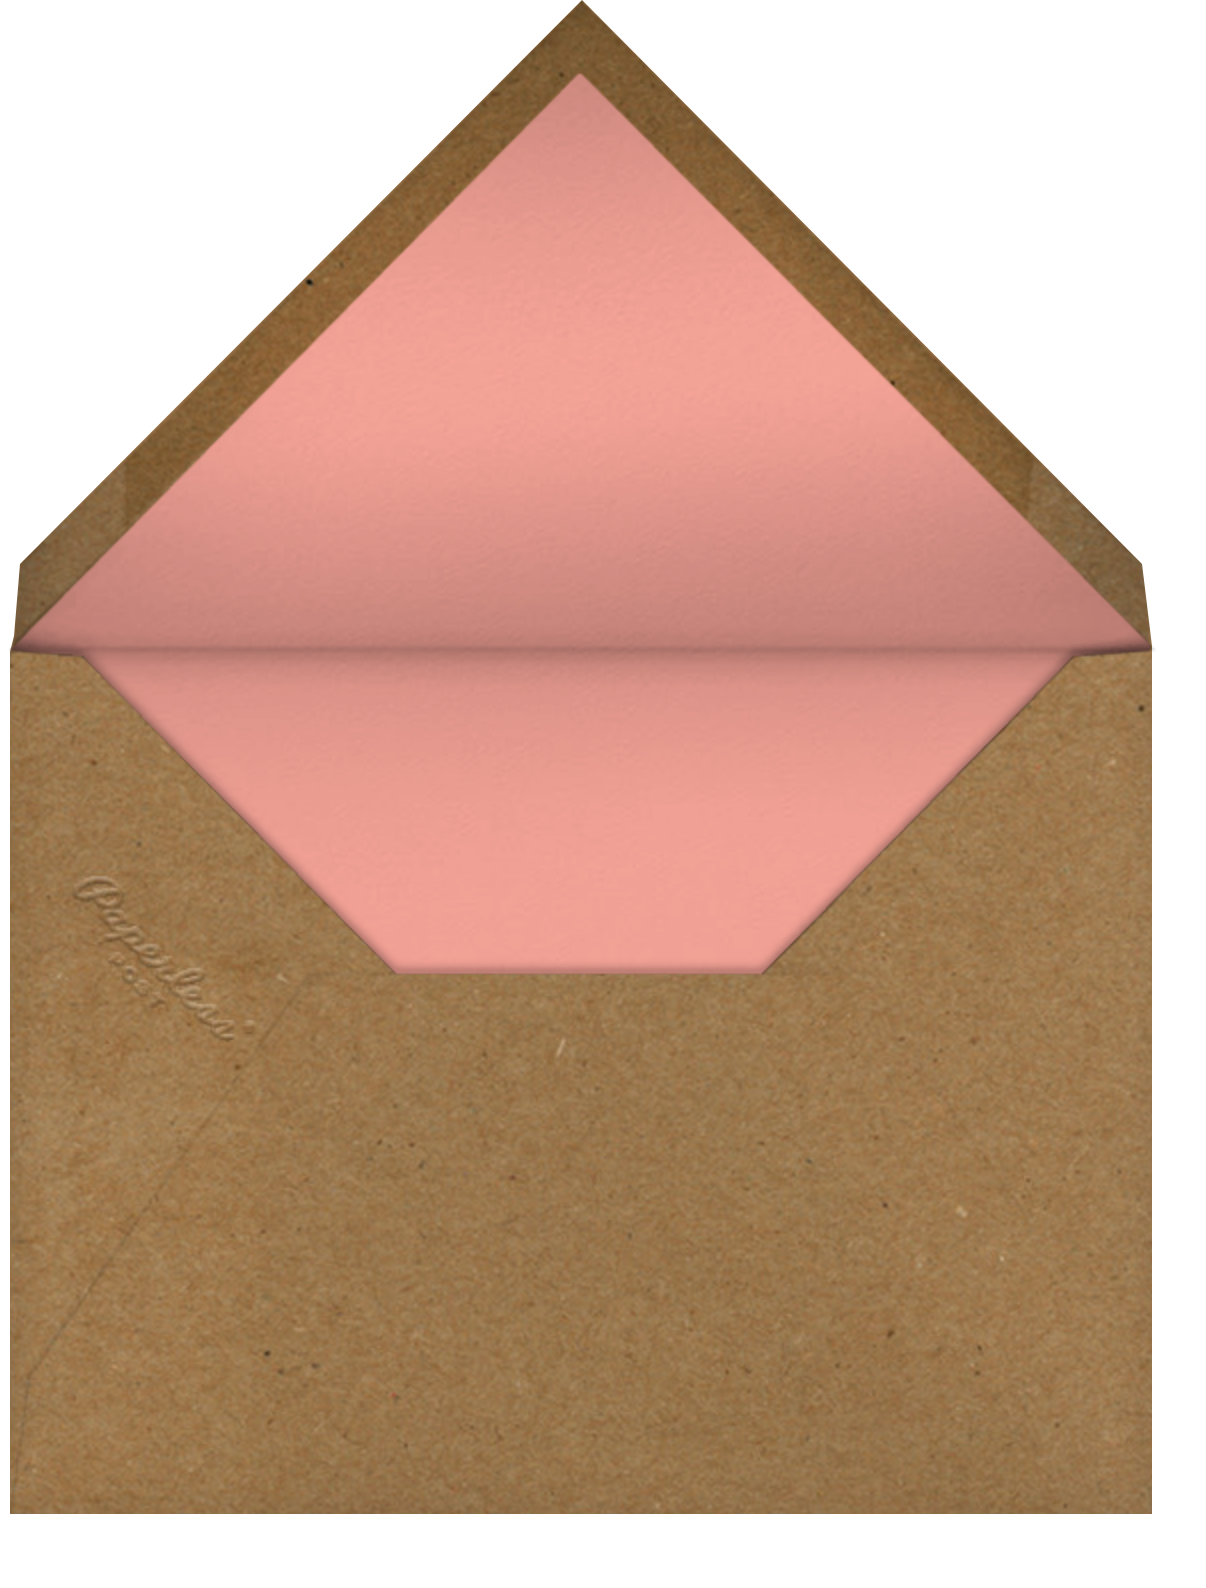 Teacup Cat (Anke Weckmann) - Red Cap Cards - Envelope